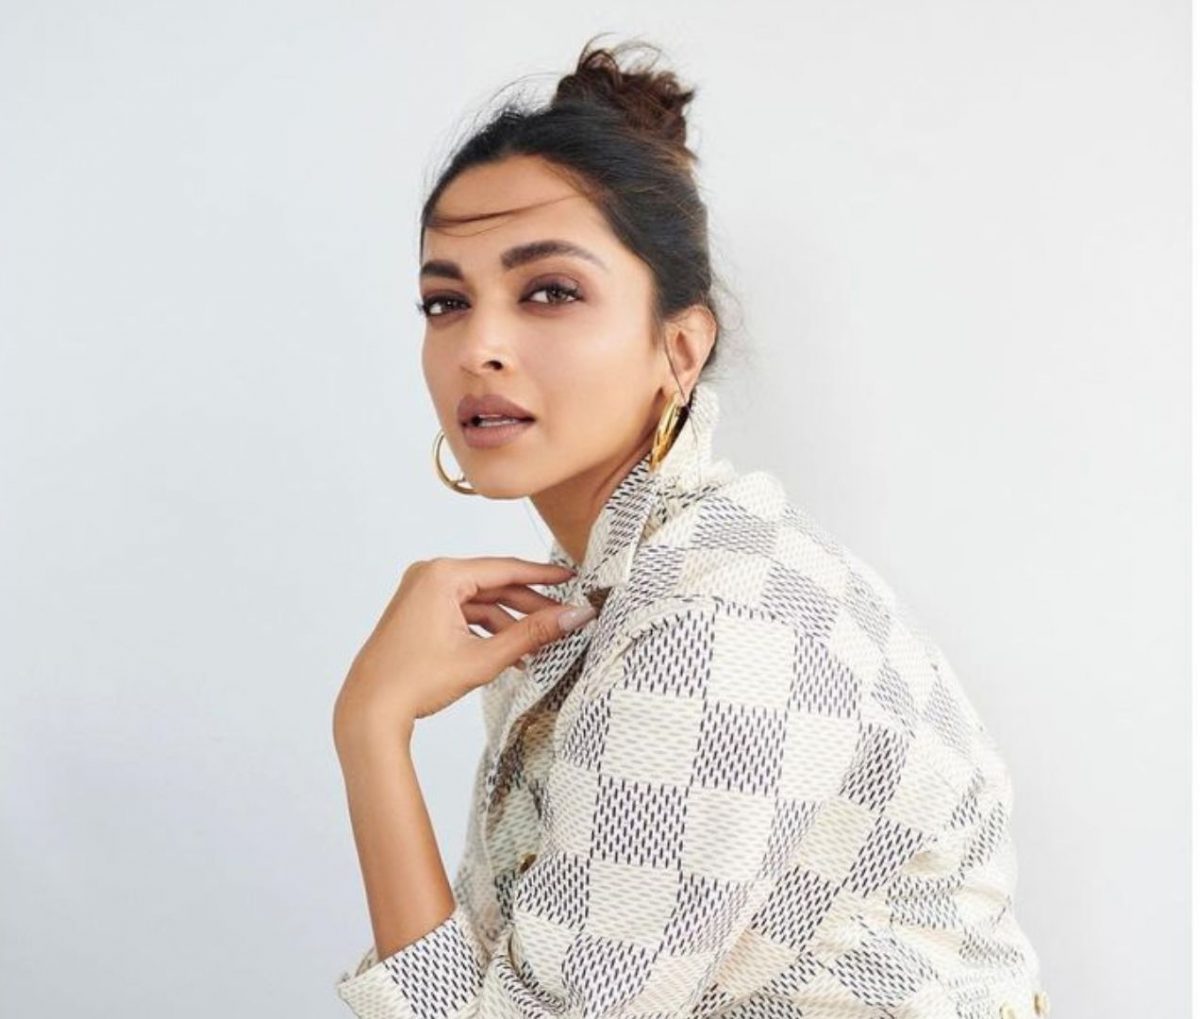 Deepika Padukone's minimalist Louis Vuitton ad gets mixed response